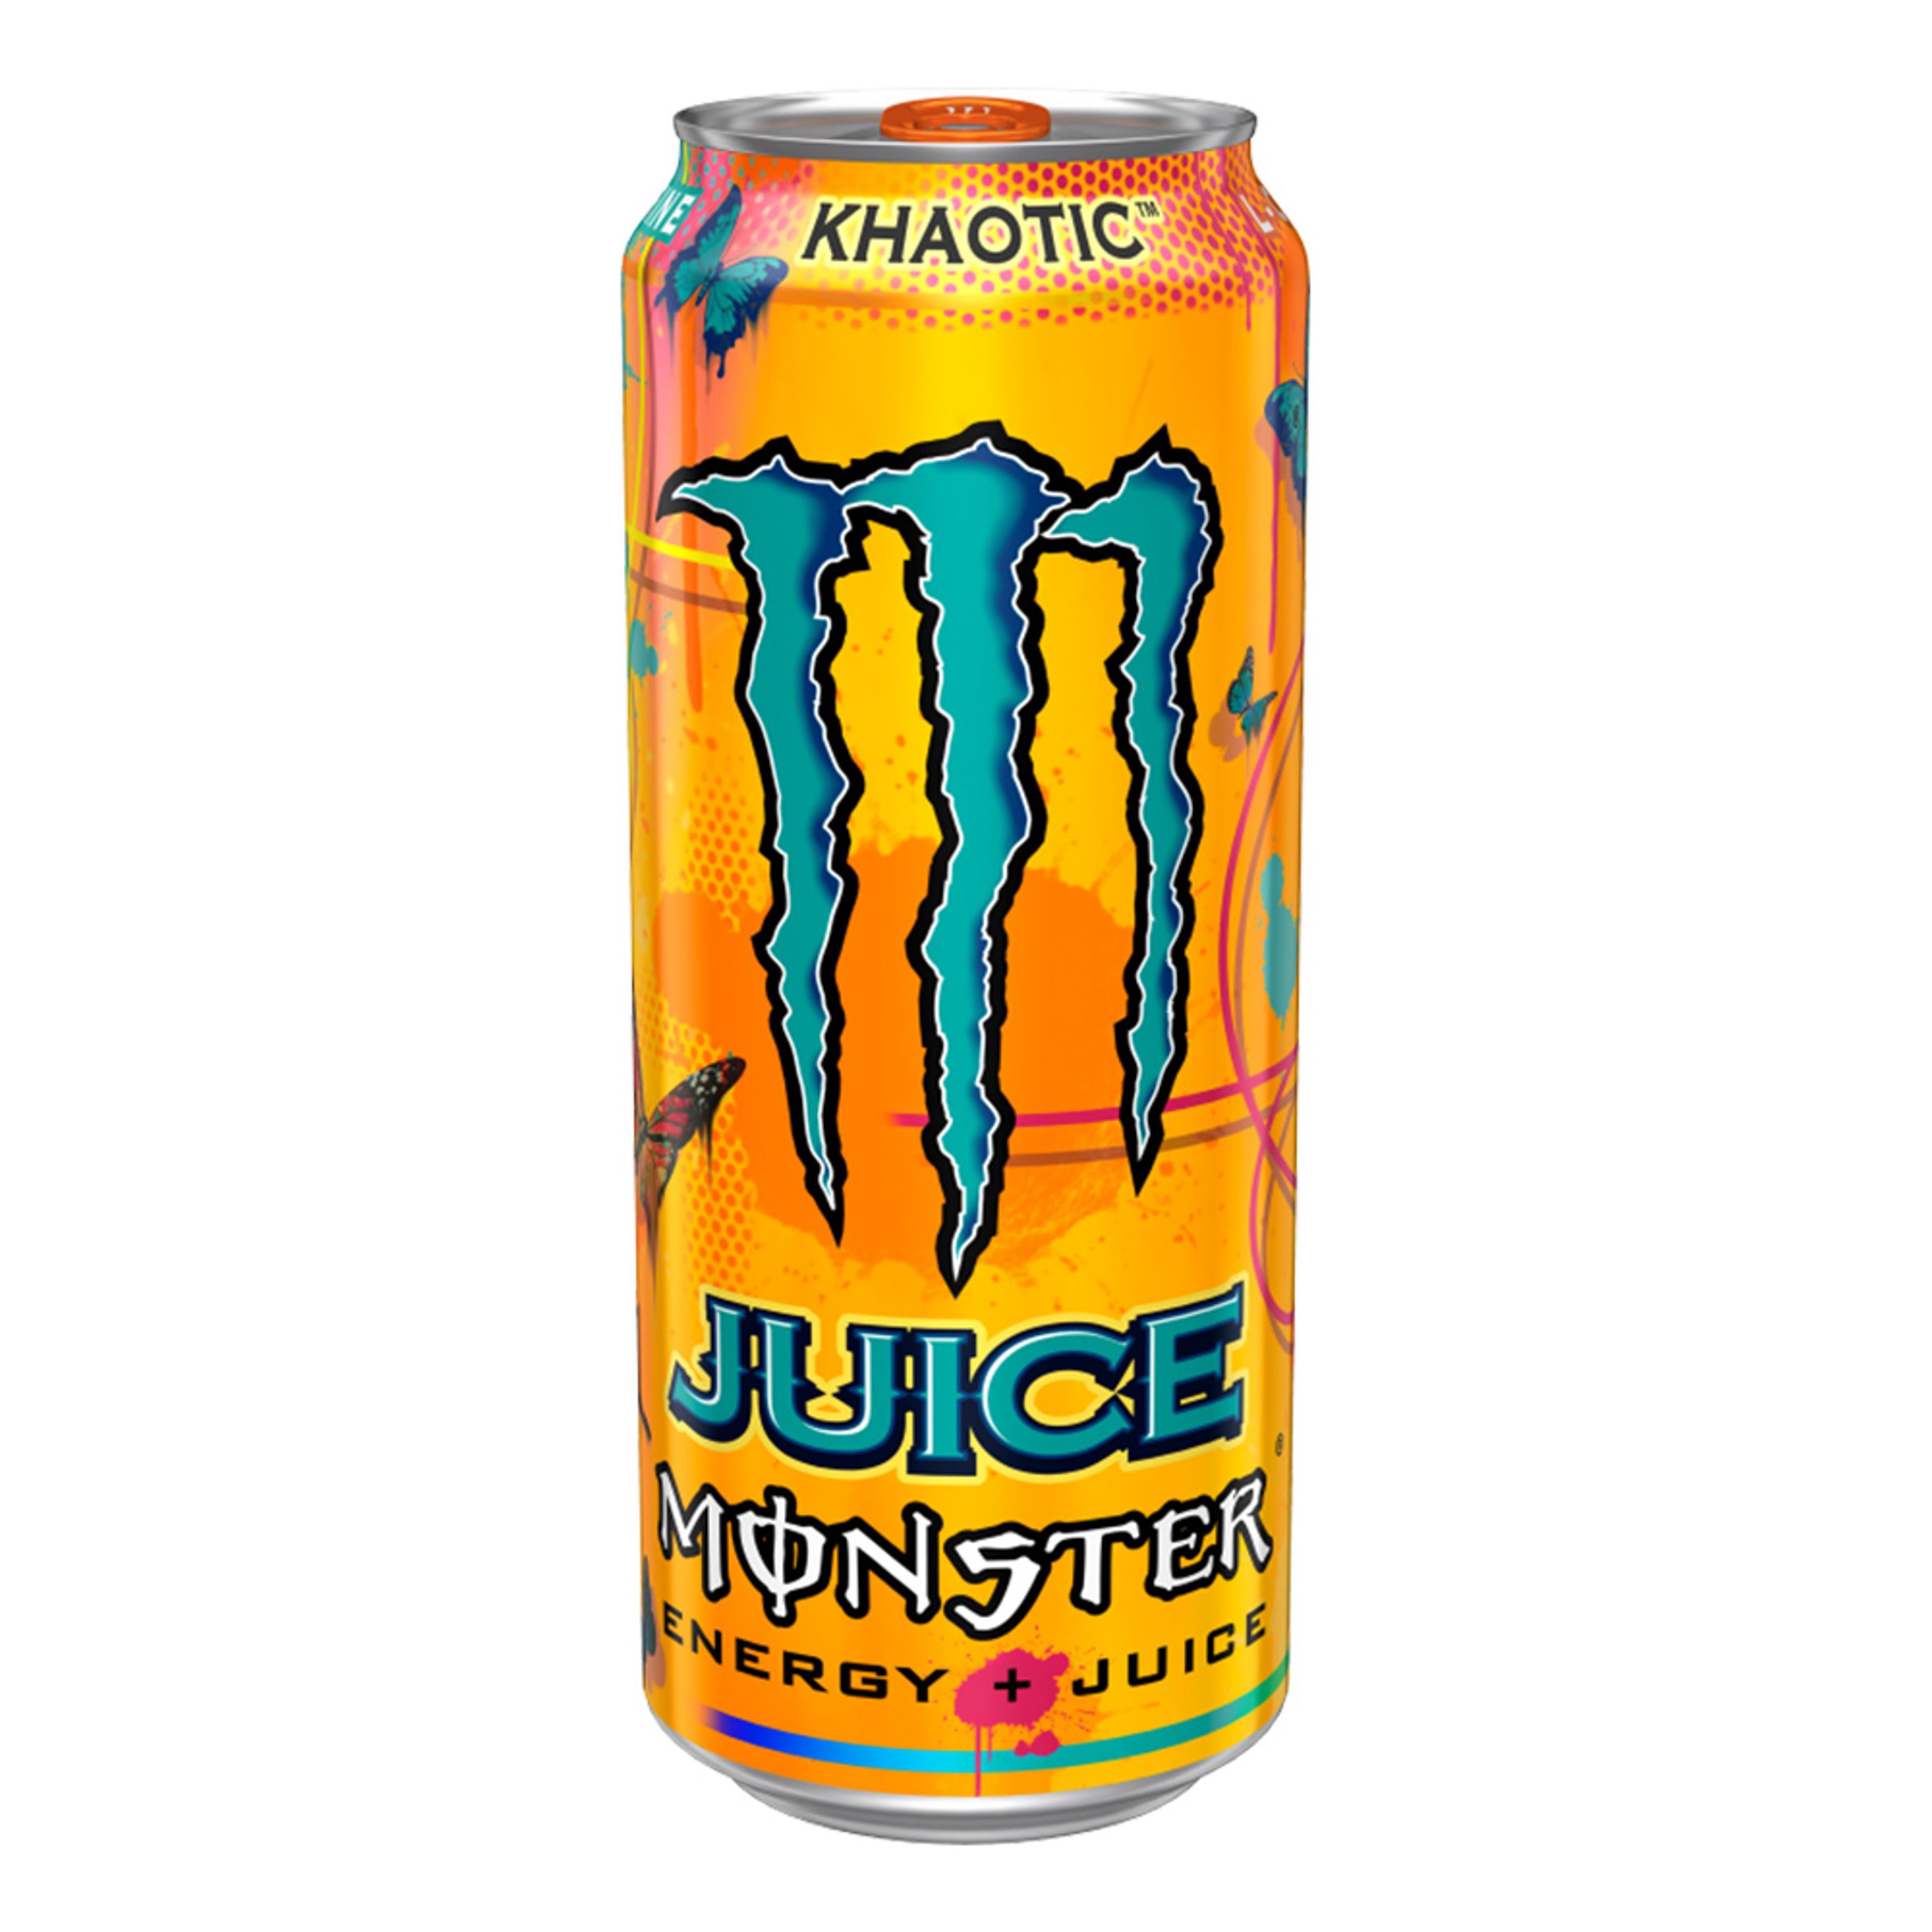 Monster Energy Juiced Khaotic - 24-pack